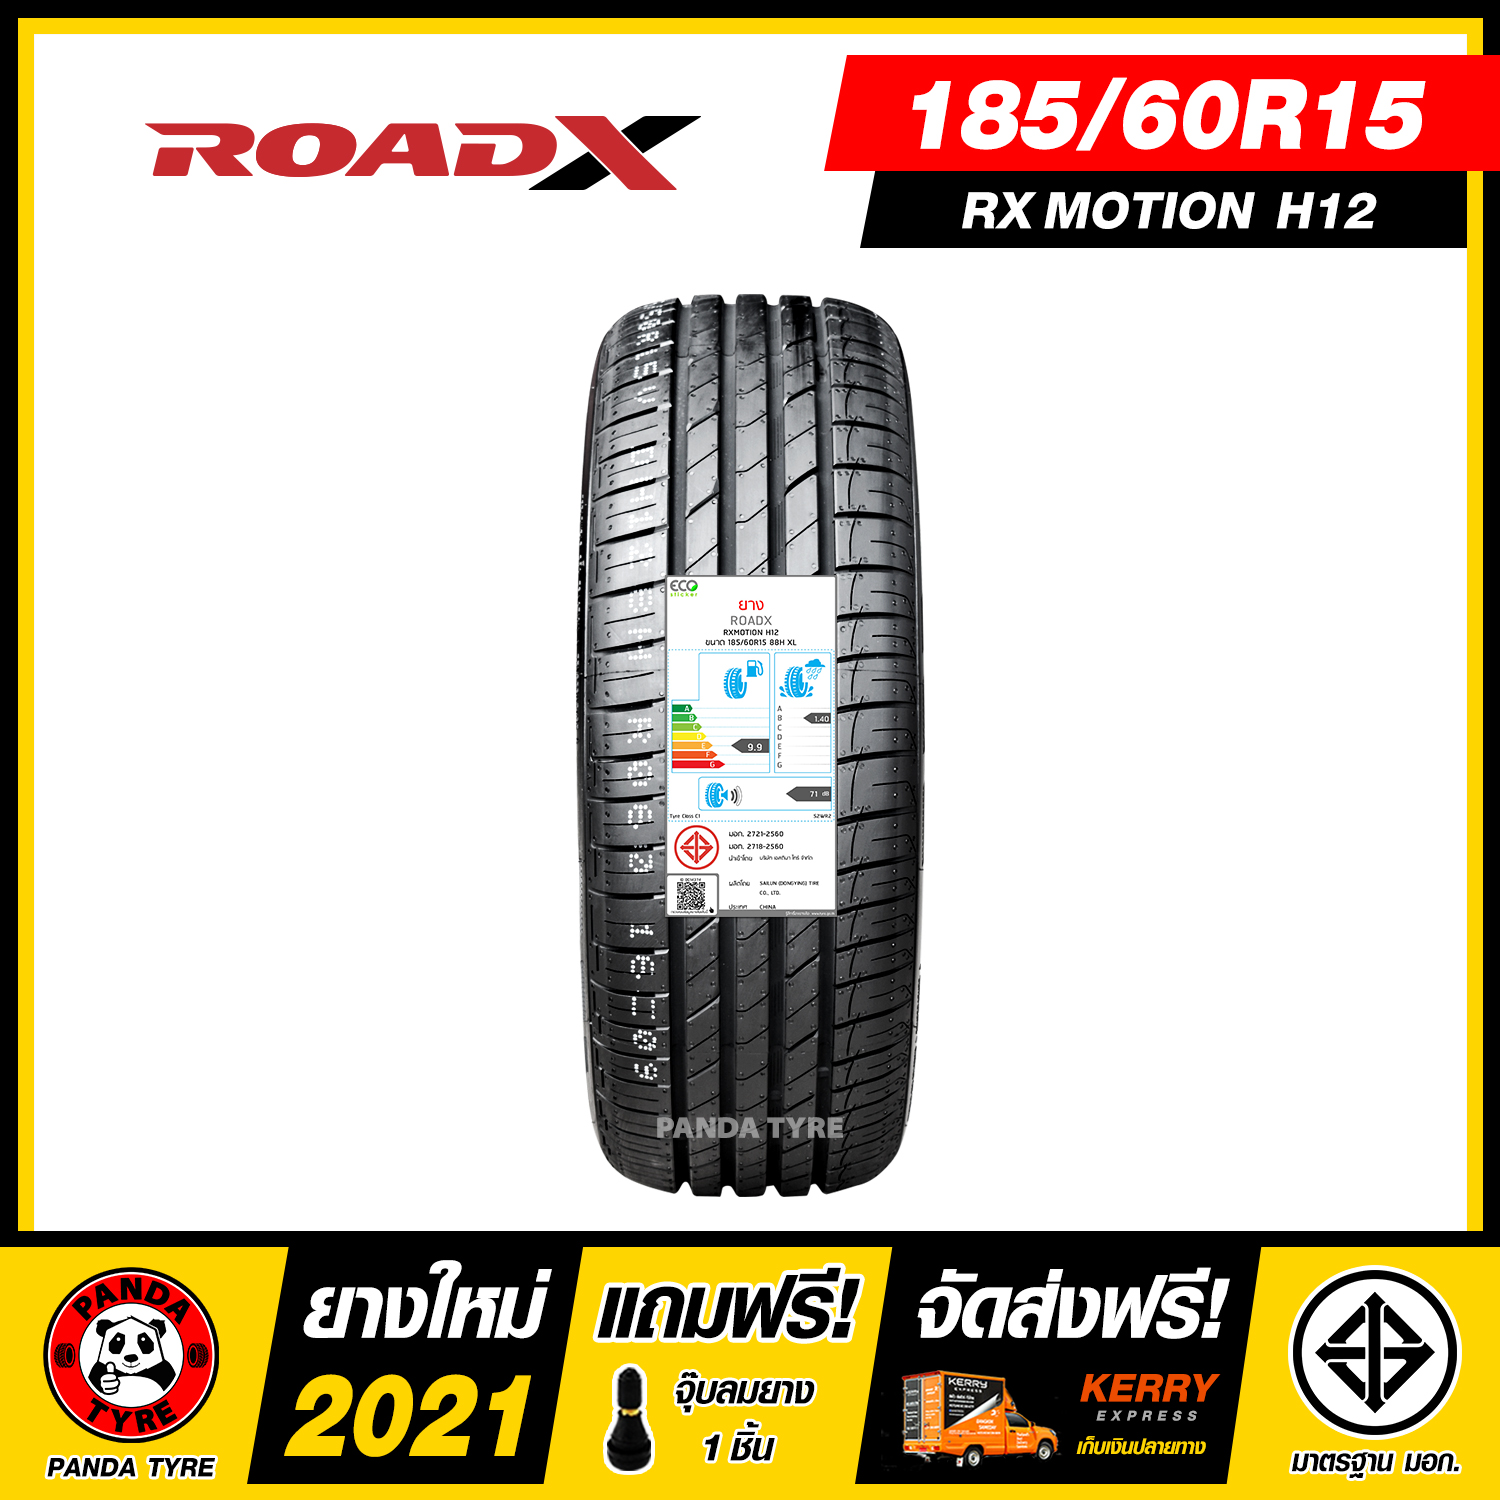 ROADX 185/60R15 ยางรถยนต์ขอบ15 รุ่น RX MOTION H12 - 1 เส้น (ยางใหม่ผลิตปี 2021)